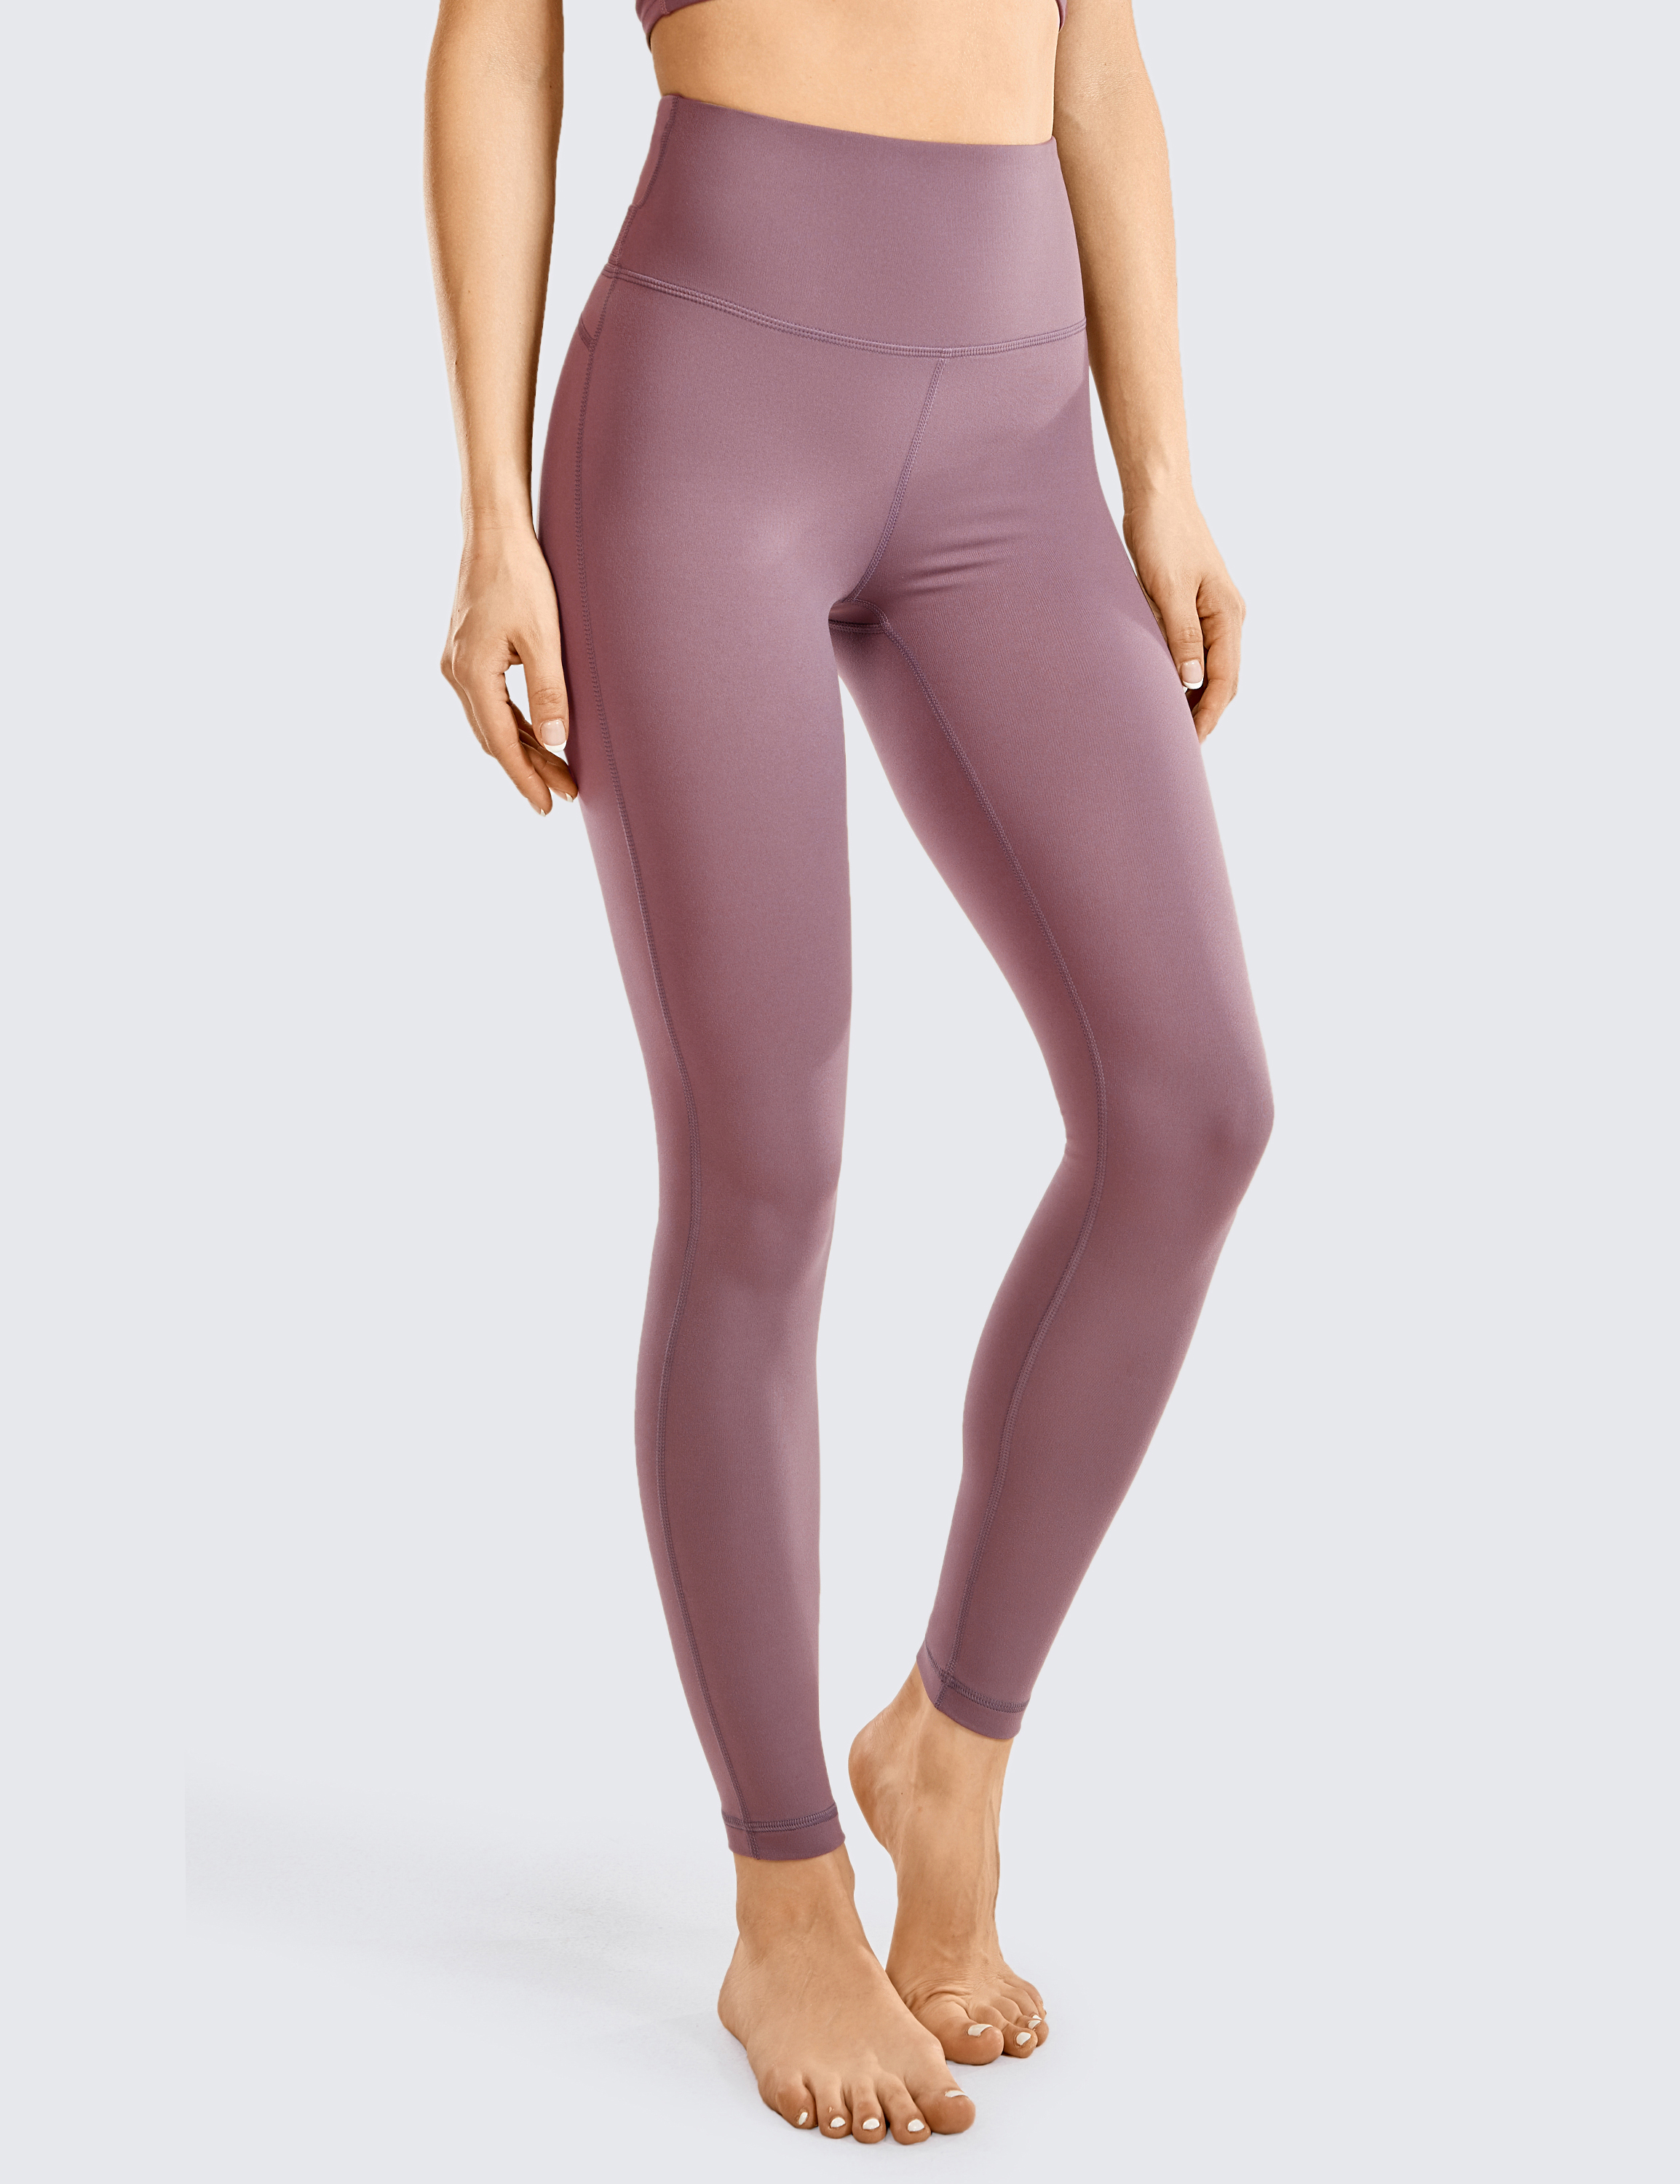 VASLANDA Flare Pants for Women - High Waist Workout Bootleg Yoga Leggings